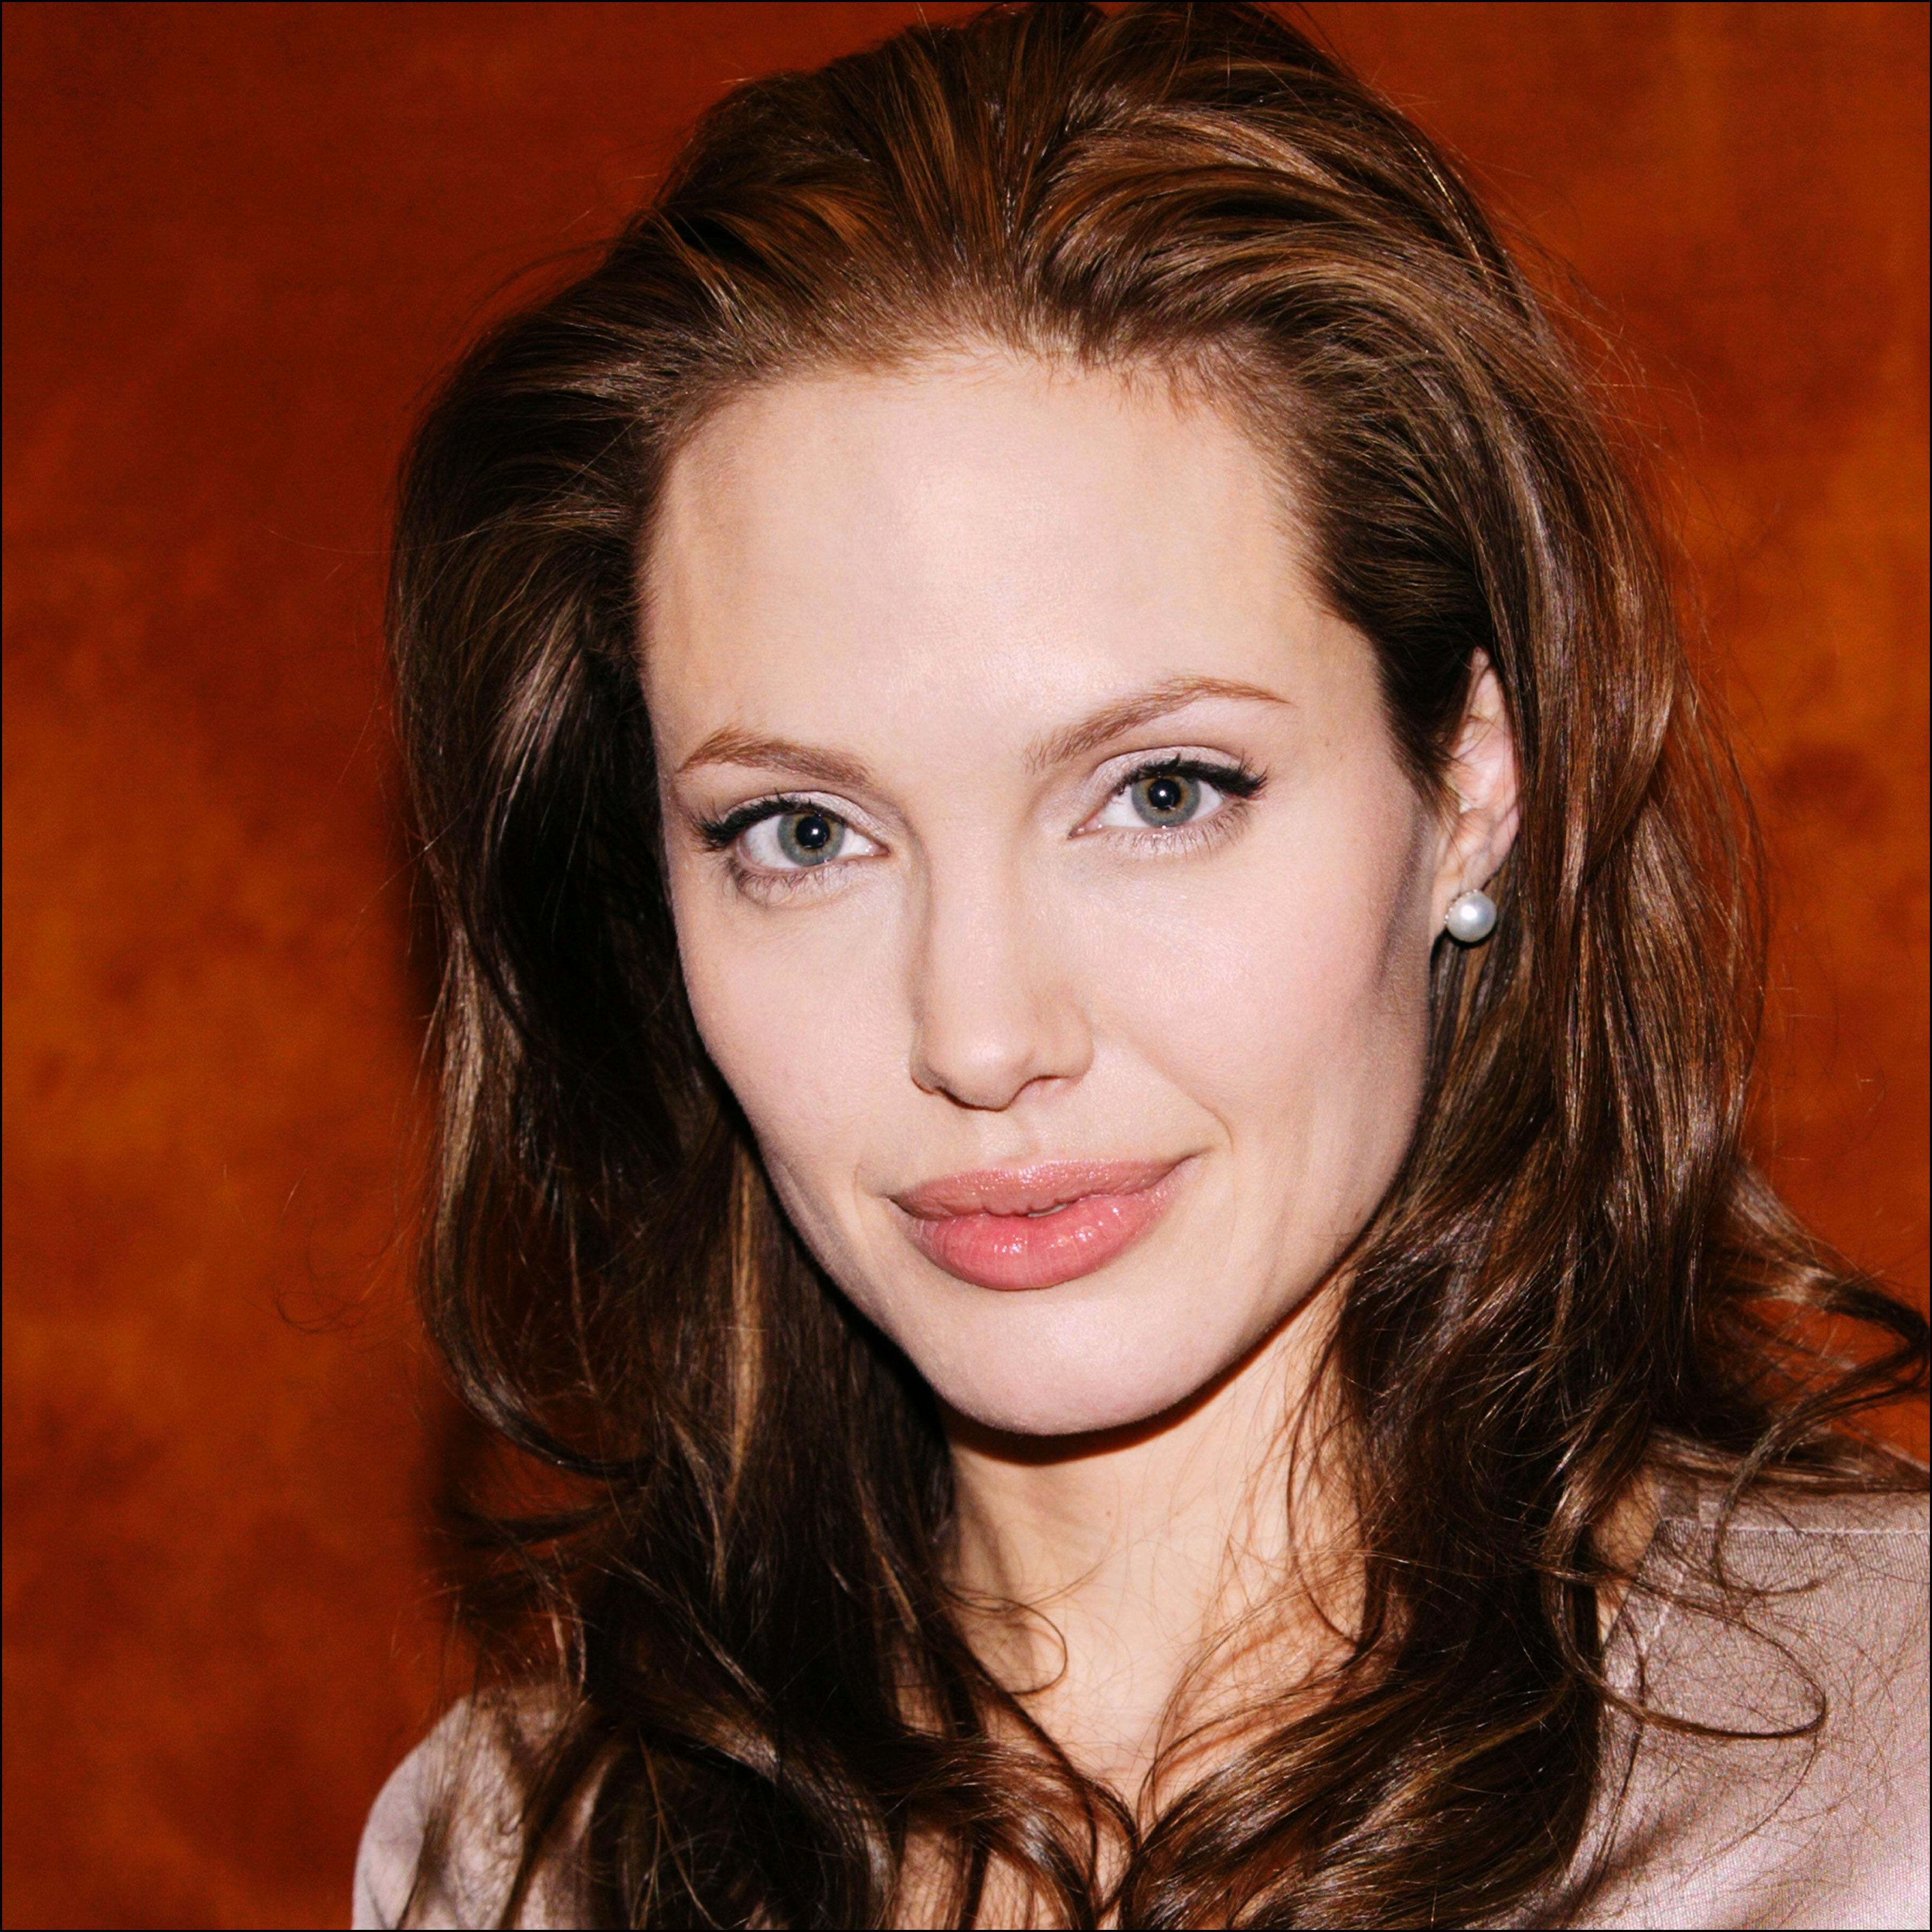 Photo №20168 Angelina Jolie.